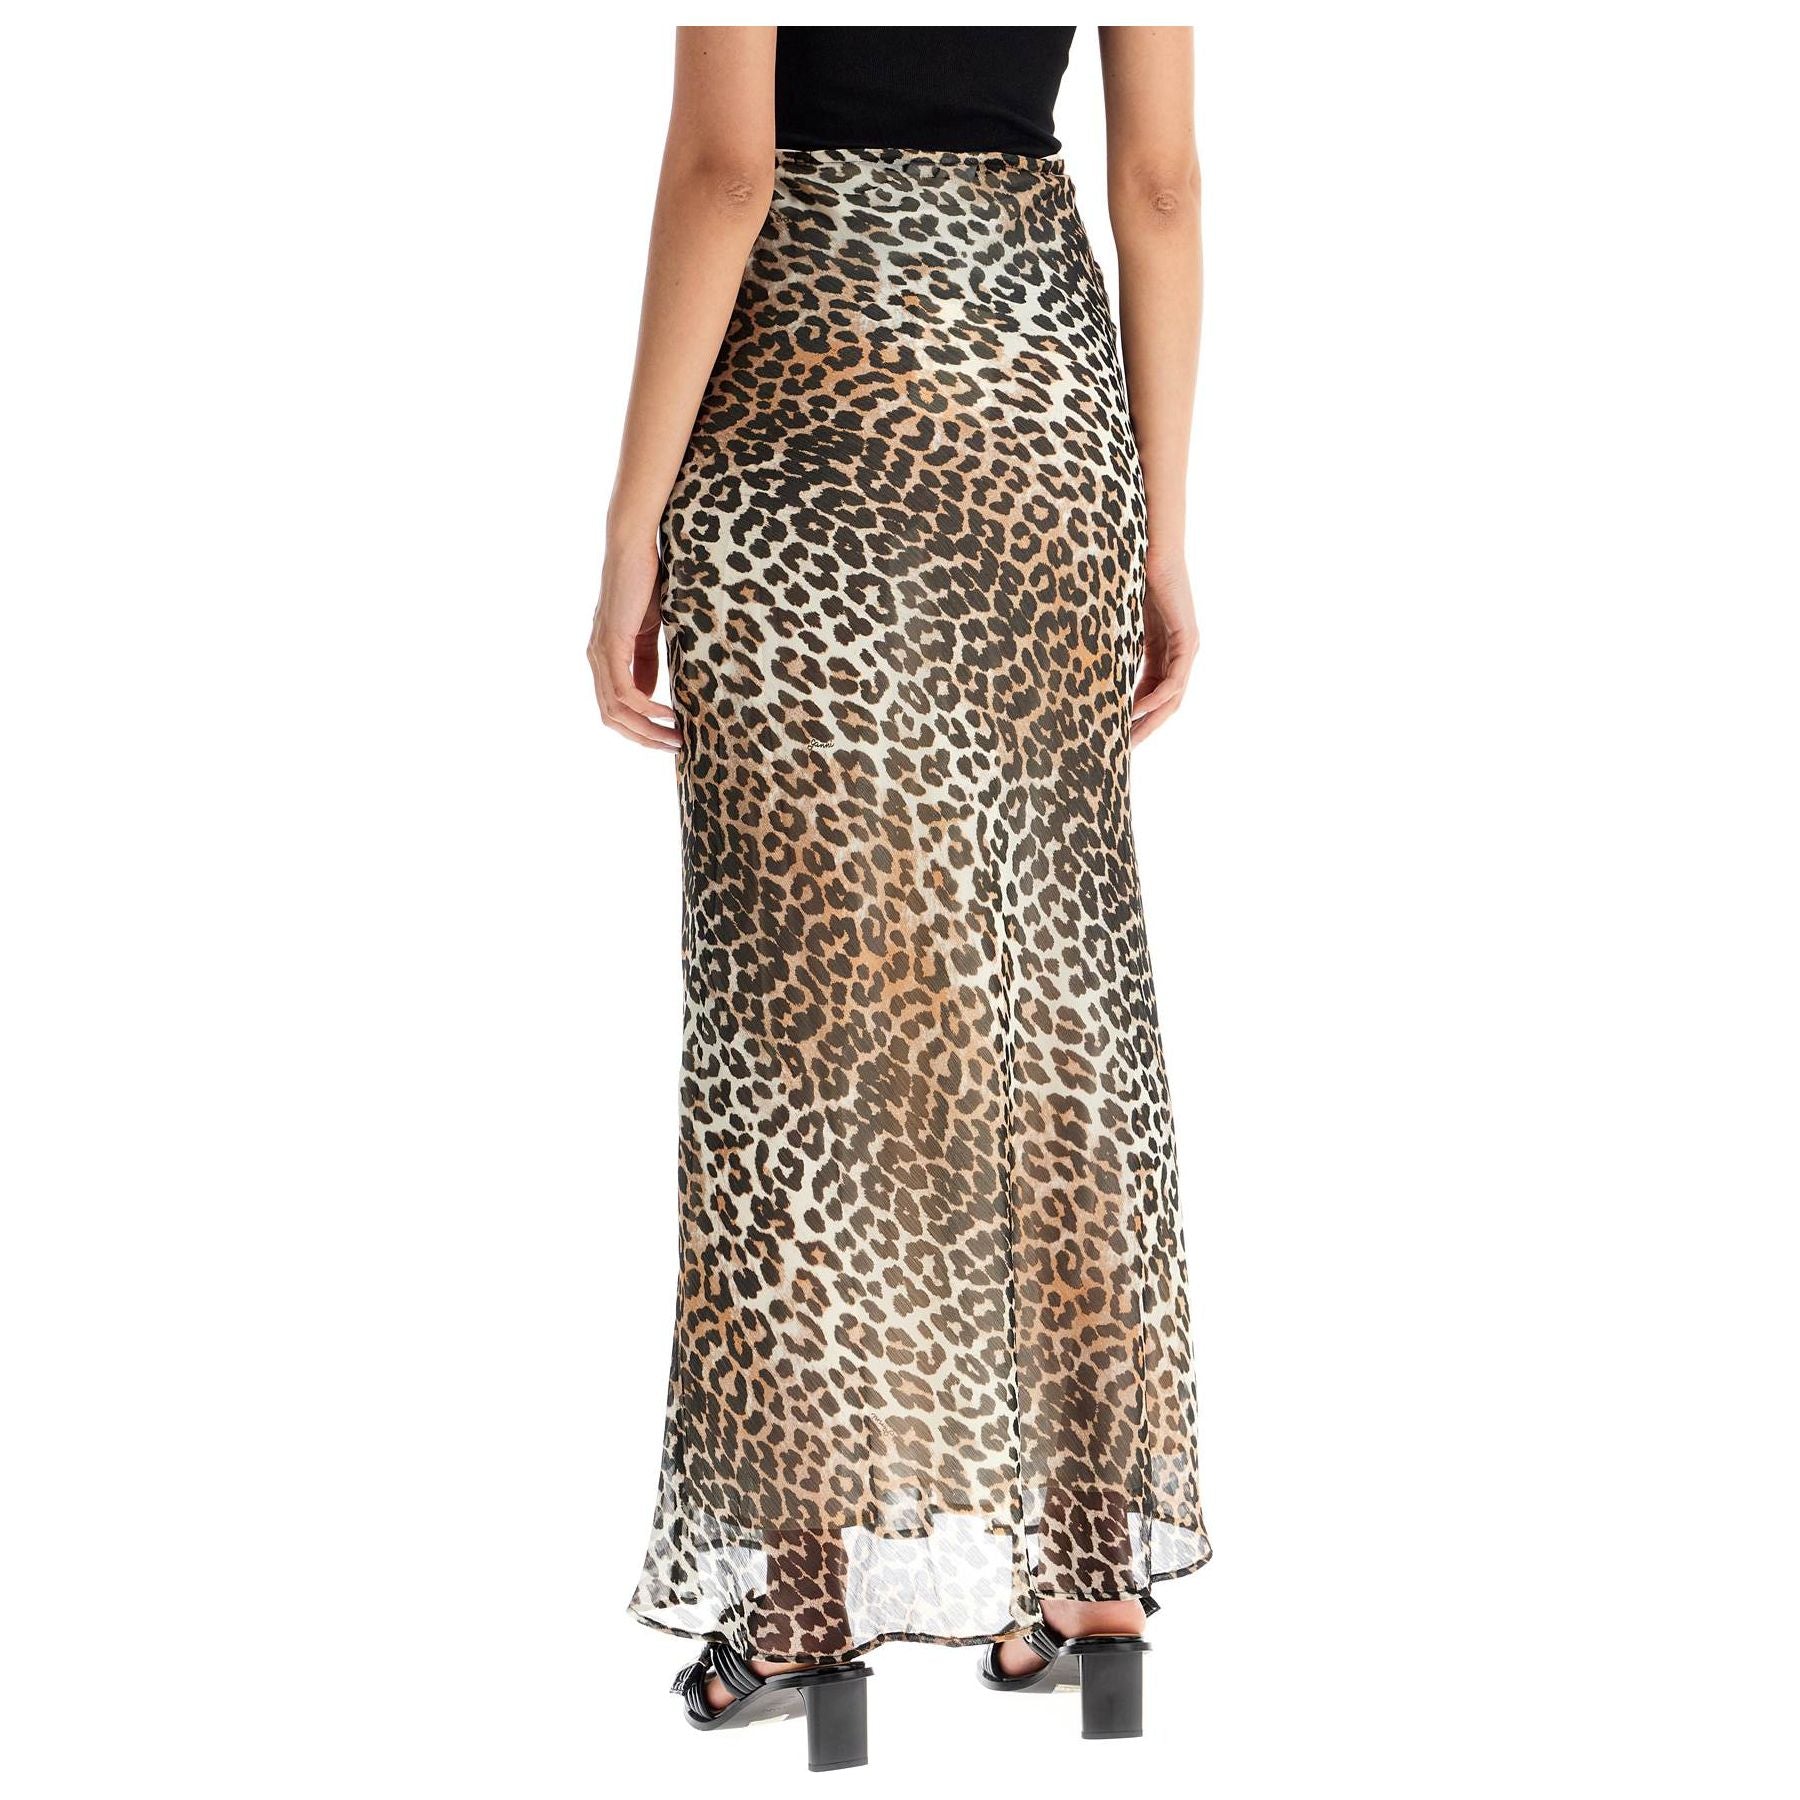 Recycled Leopard Print Chiffon Maxi Skirt